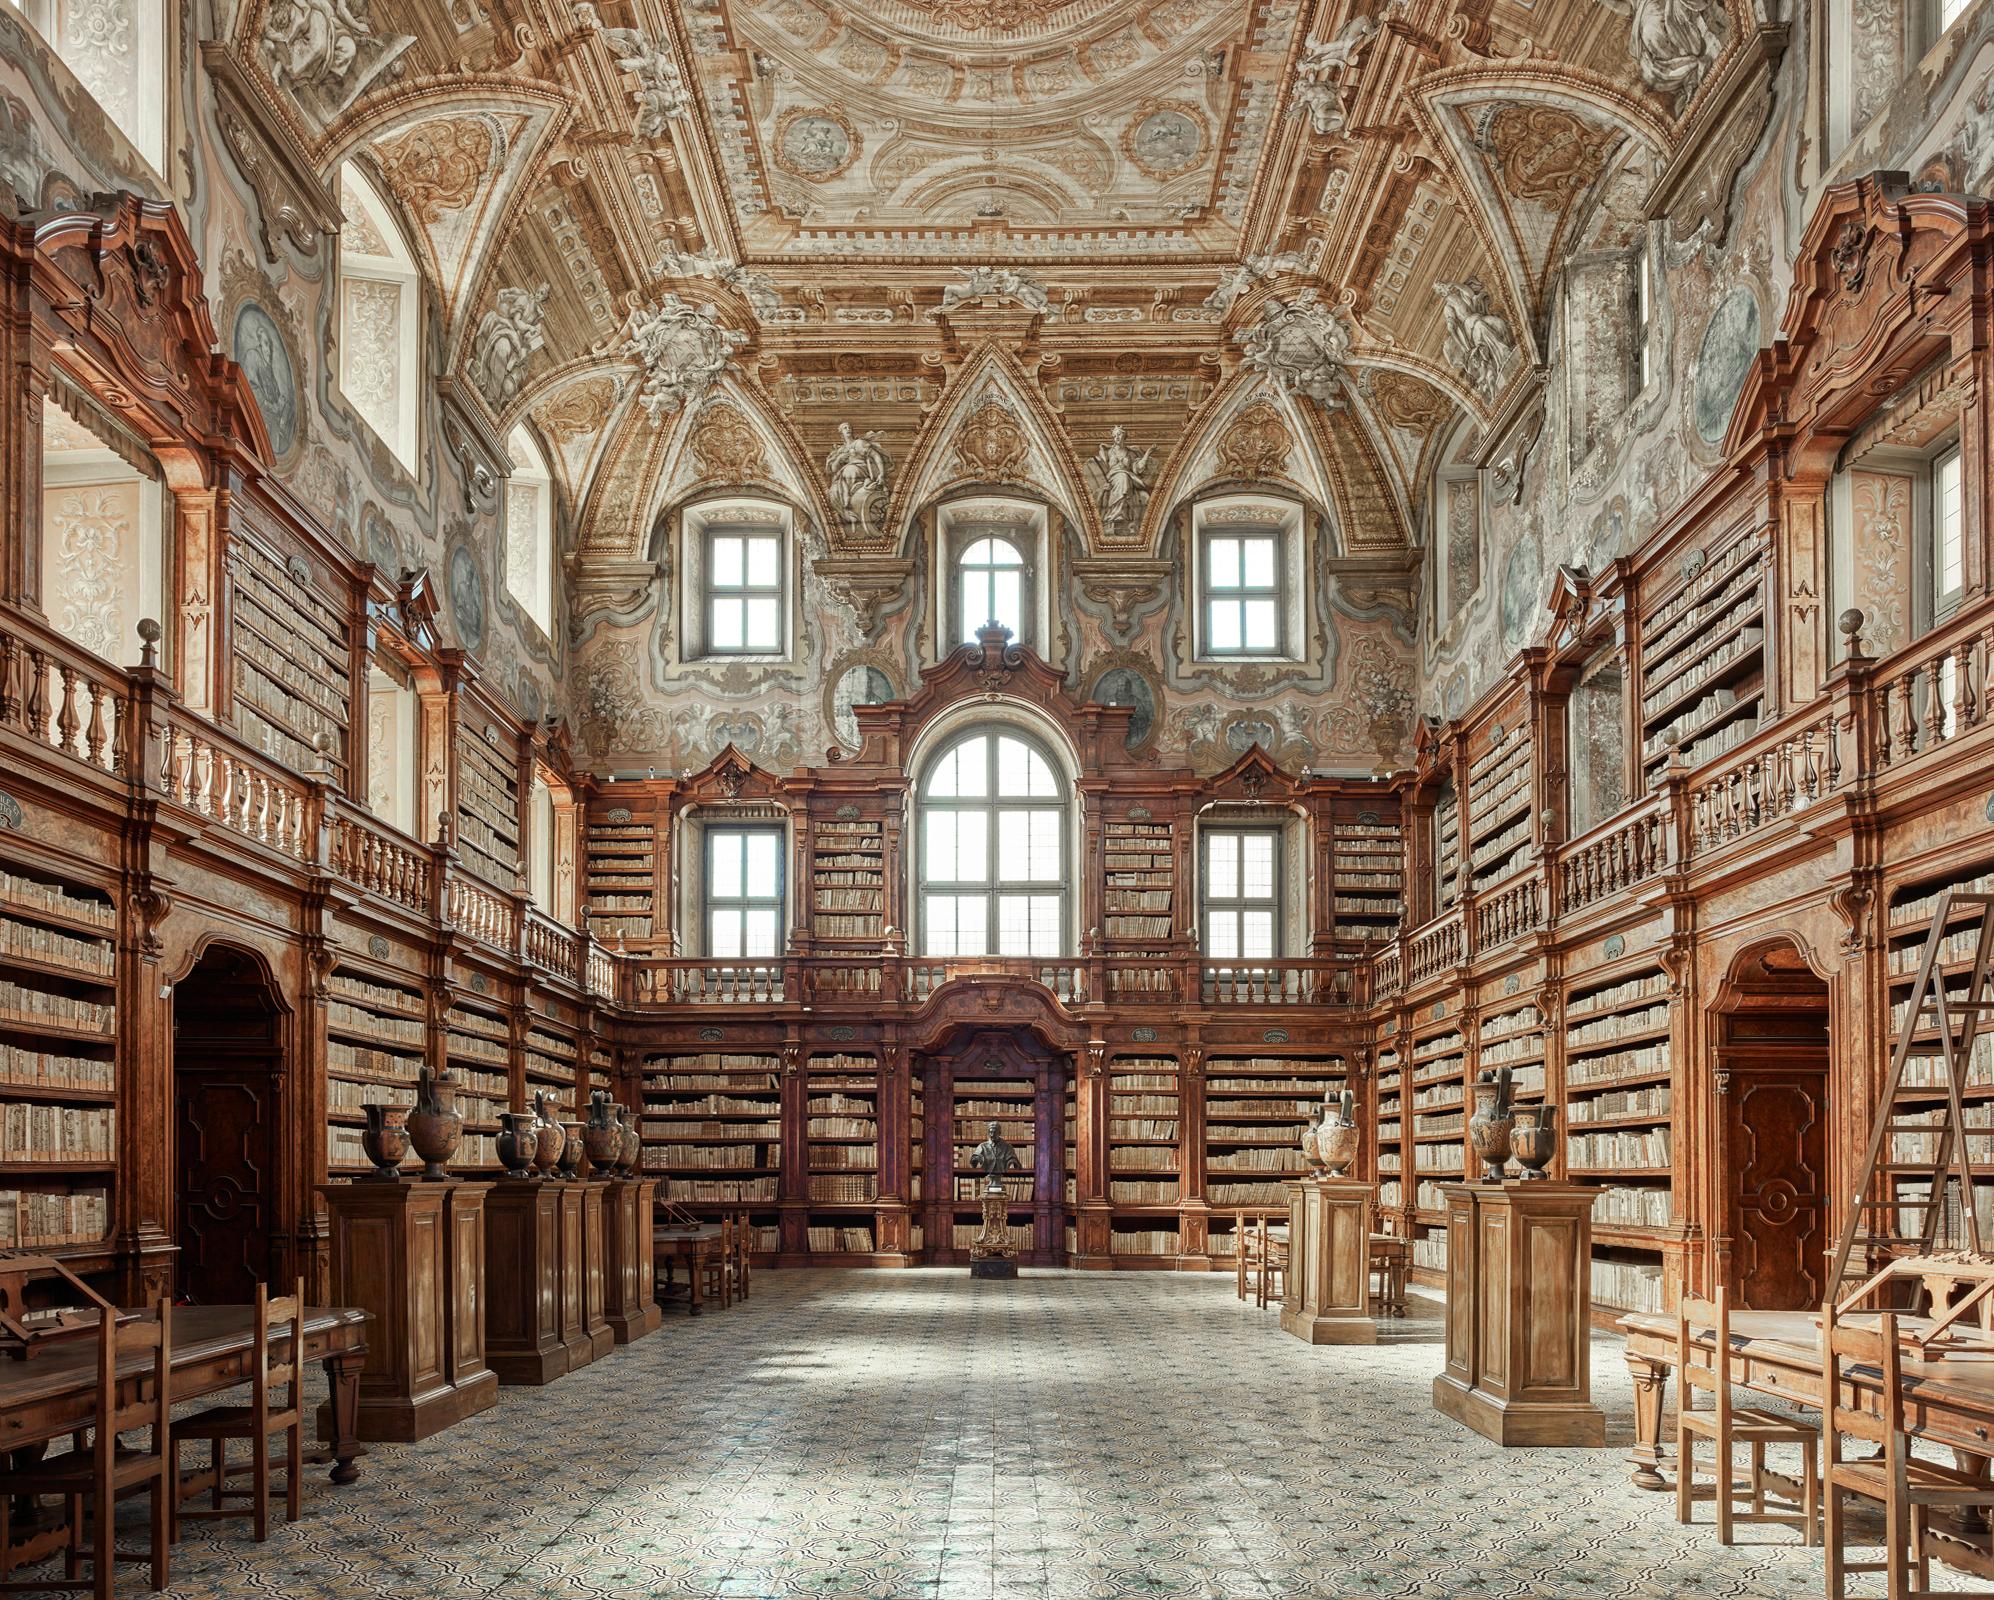 David Burdeny – Bibliothek, Neapel, Italien, Fotografie 2016, Nachdruck